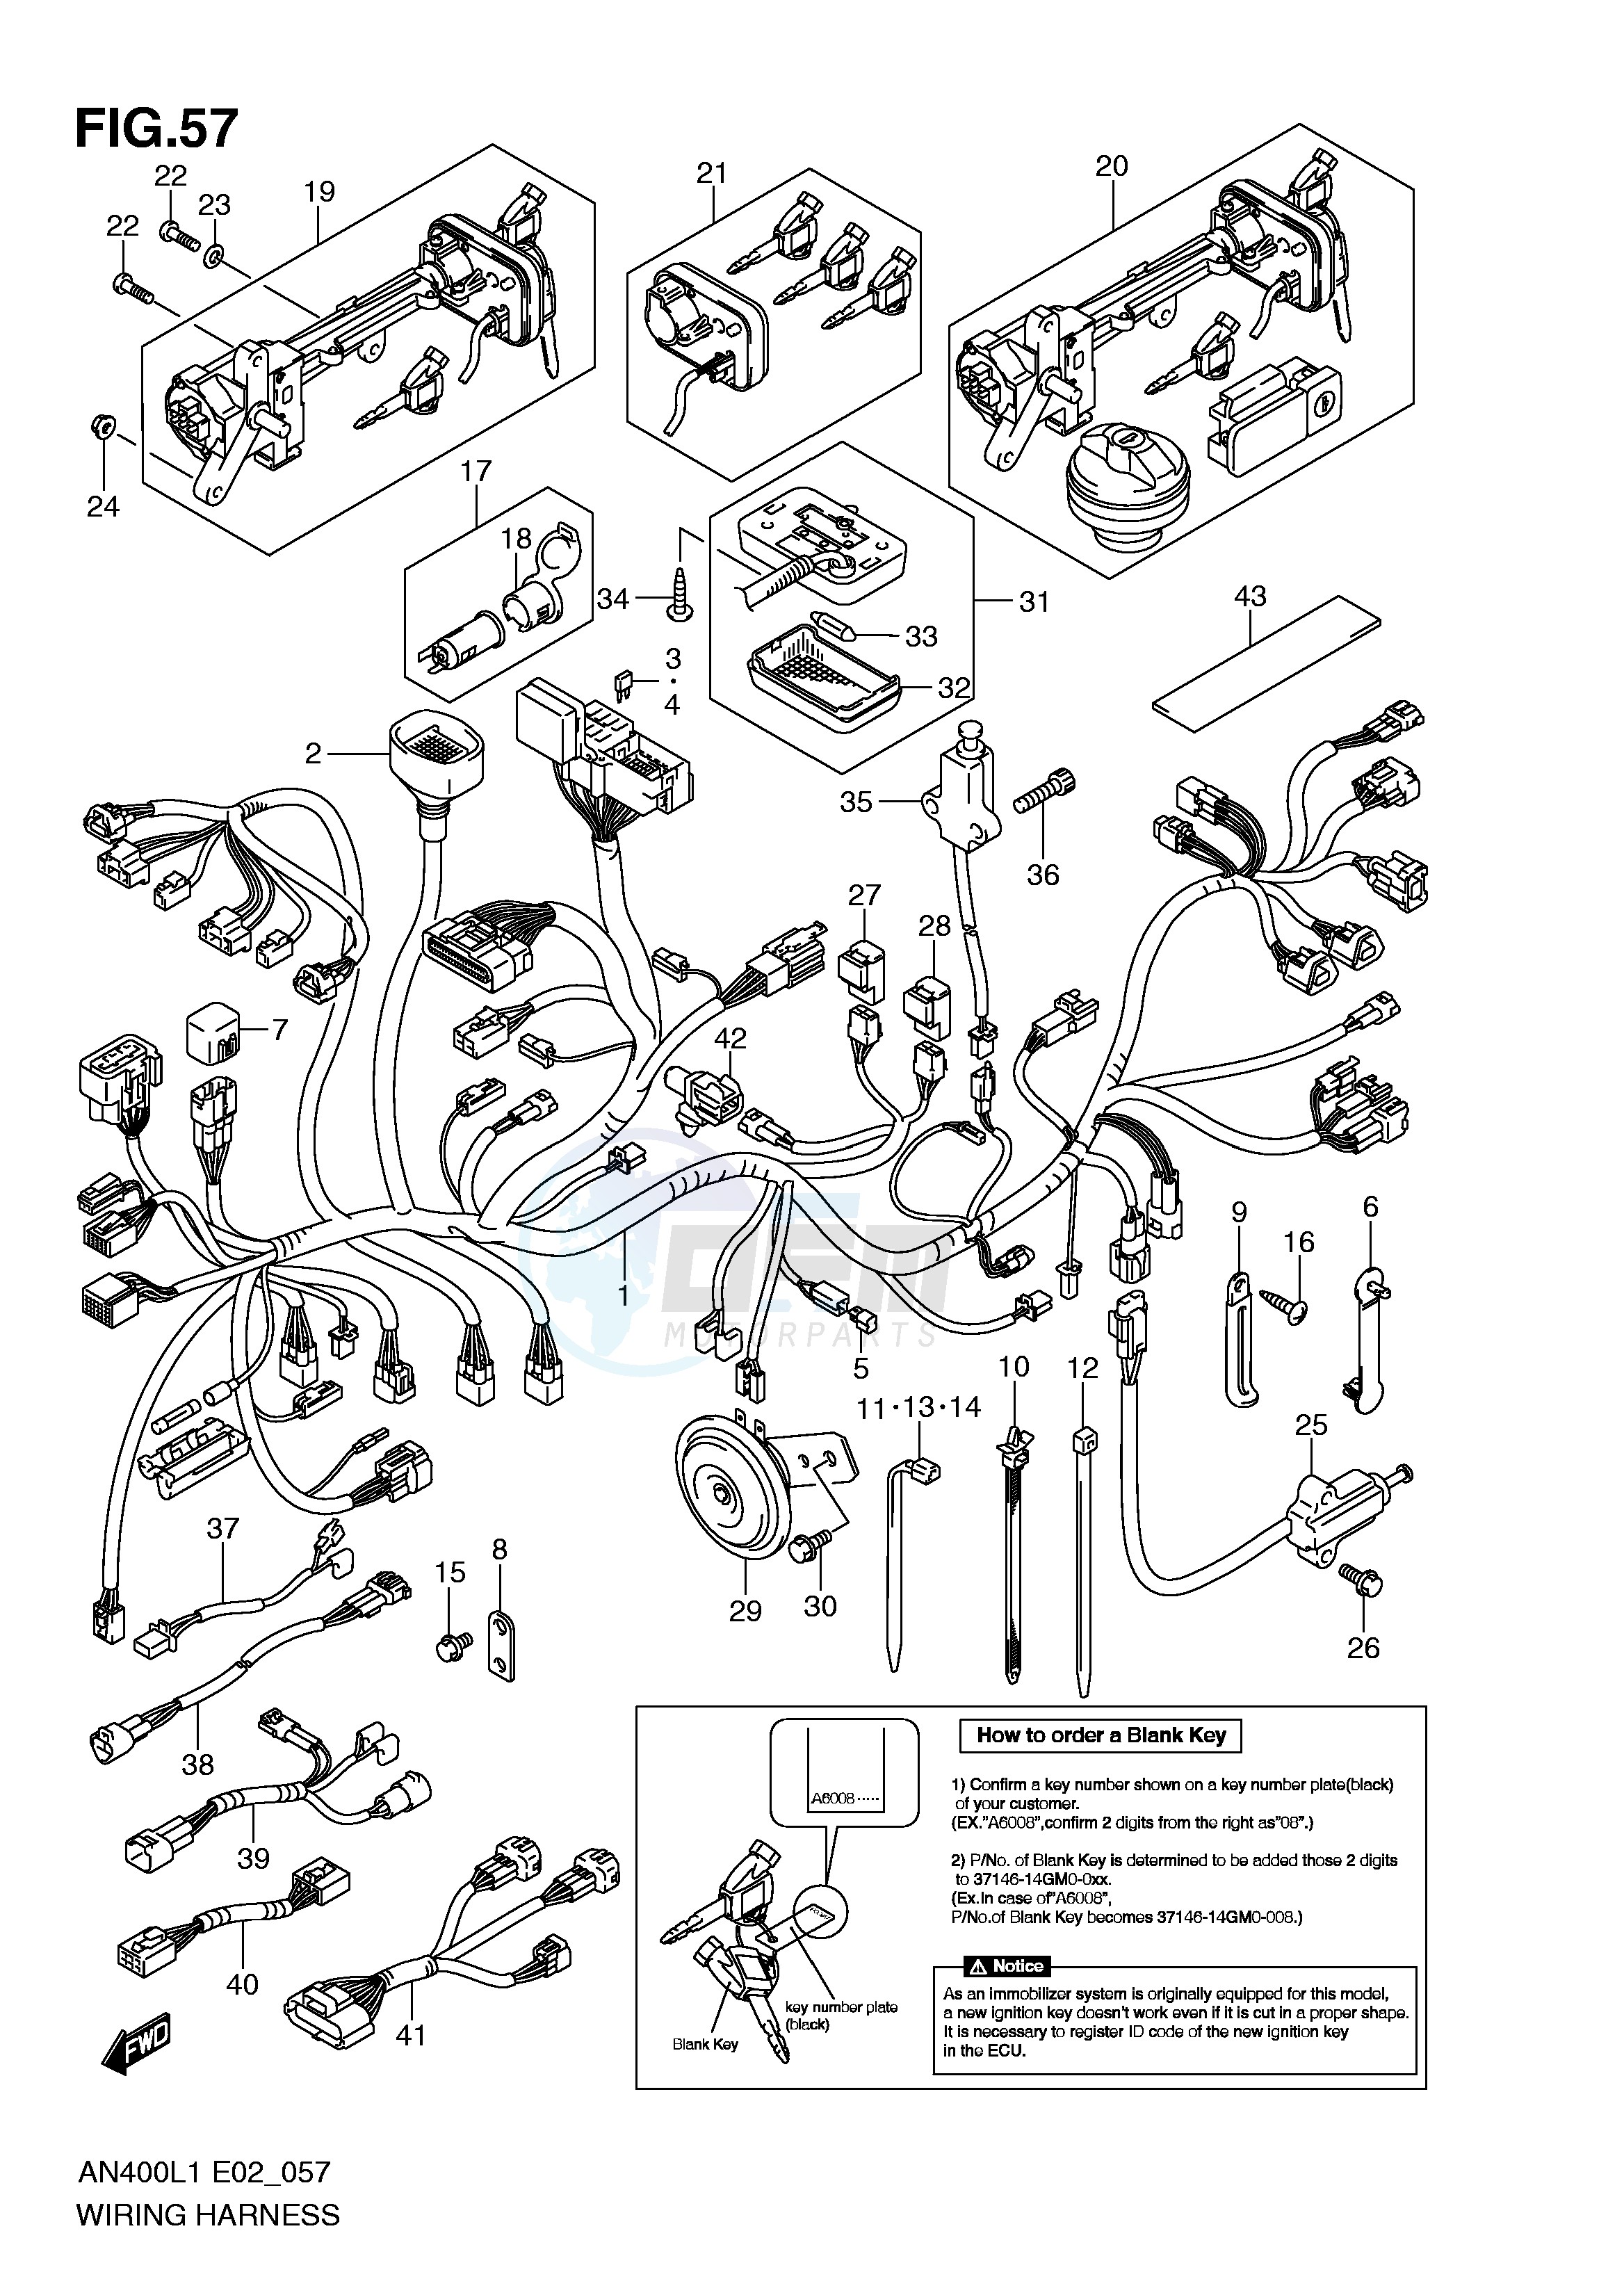 WIRING HARNESS (IMOBI) (AN400ZAL1 E19) blueprint